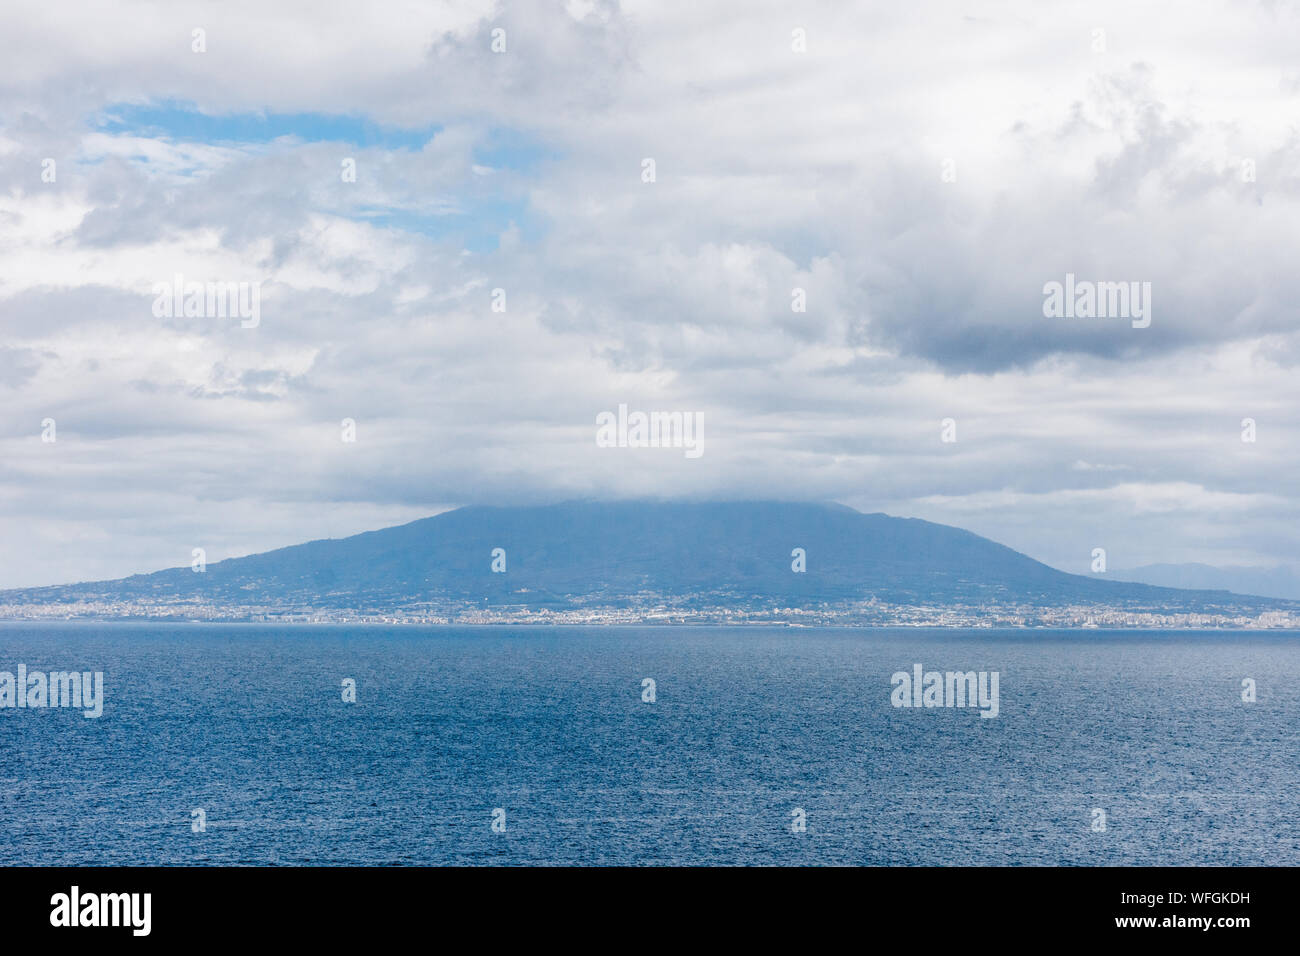 Italie, Sorrento, vue de la splendide mer bleue. Banque D'Images